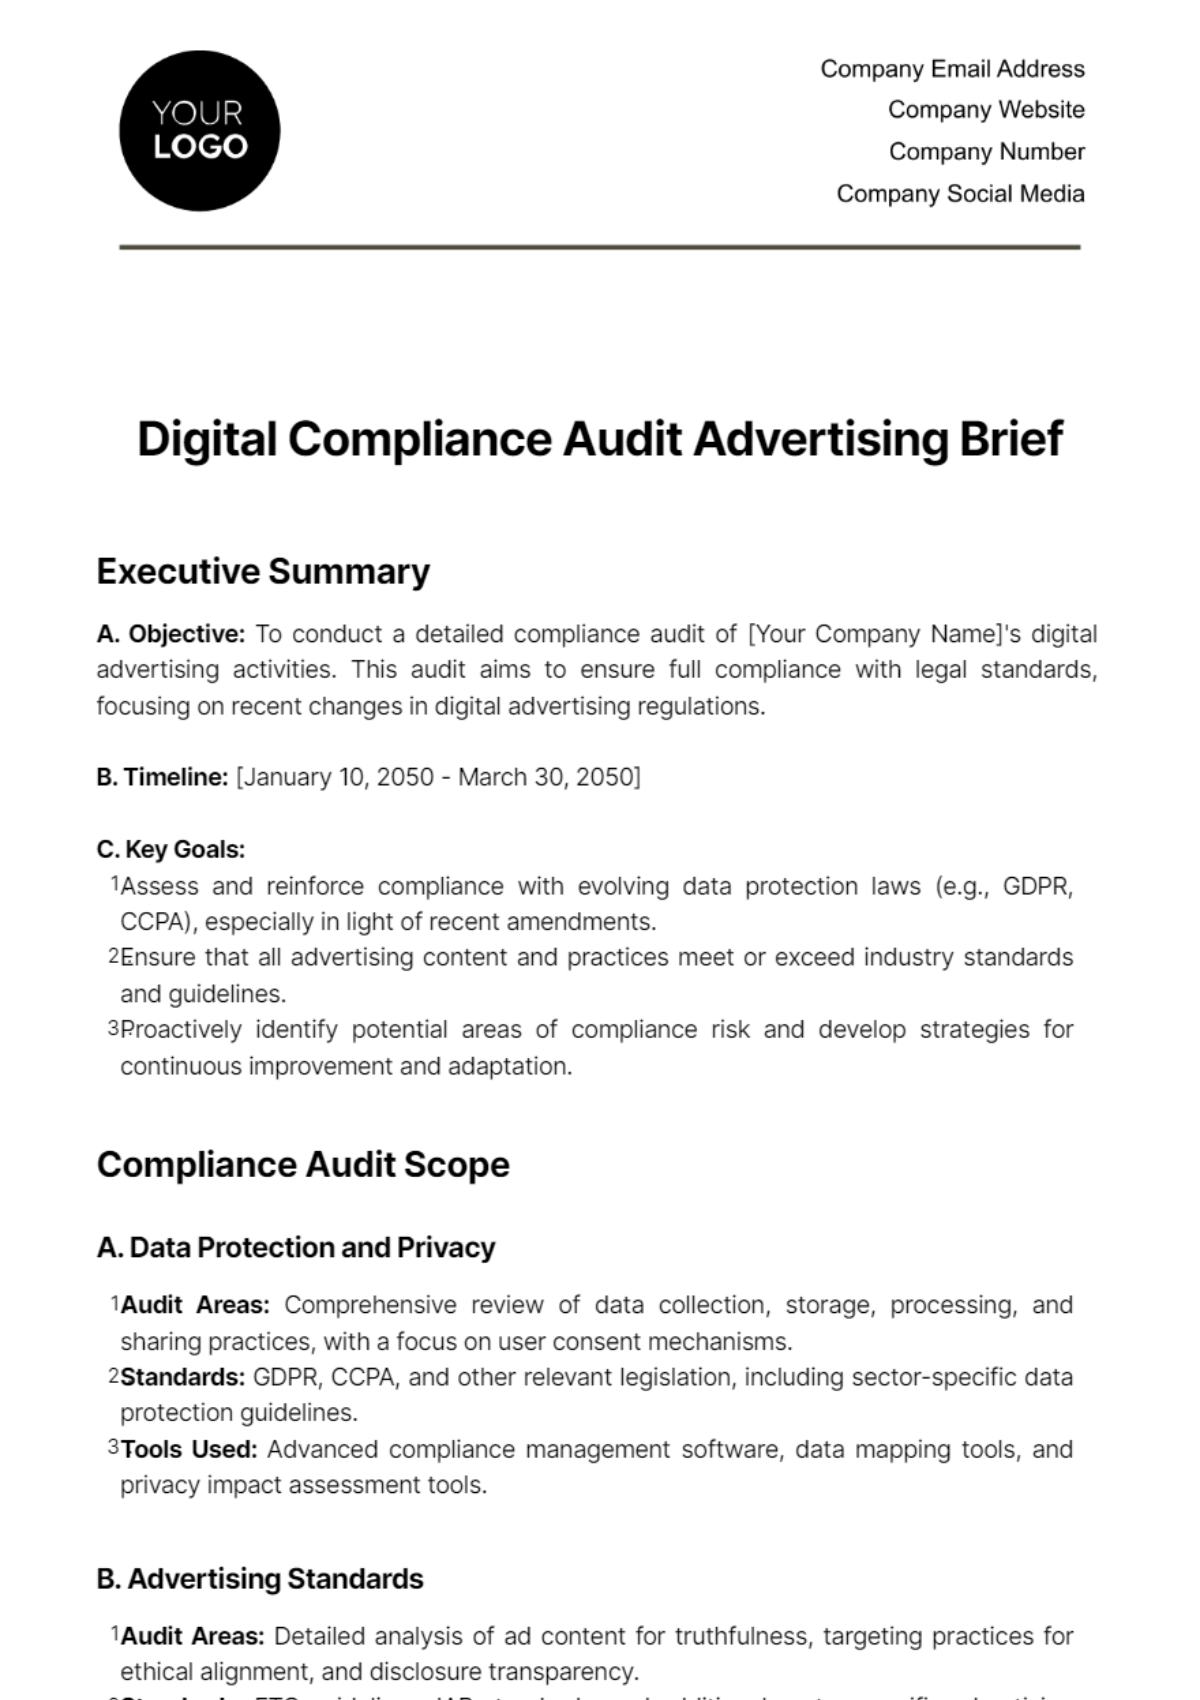 Digital Compliance Audit Advertising Brief Template